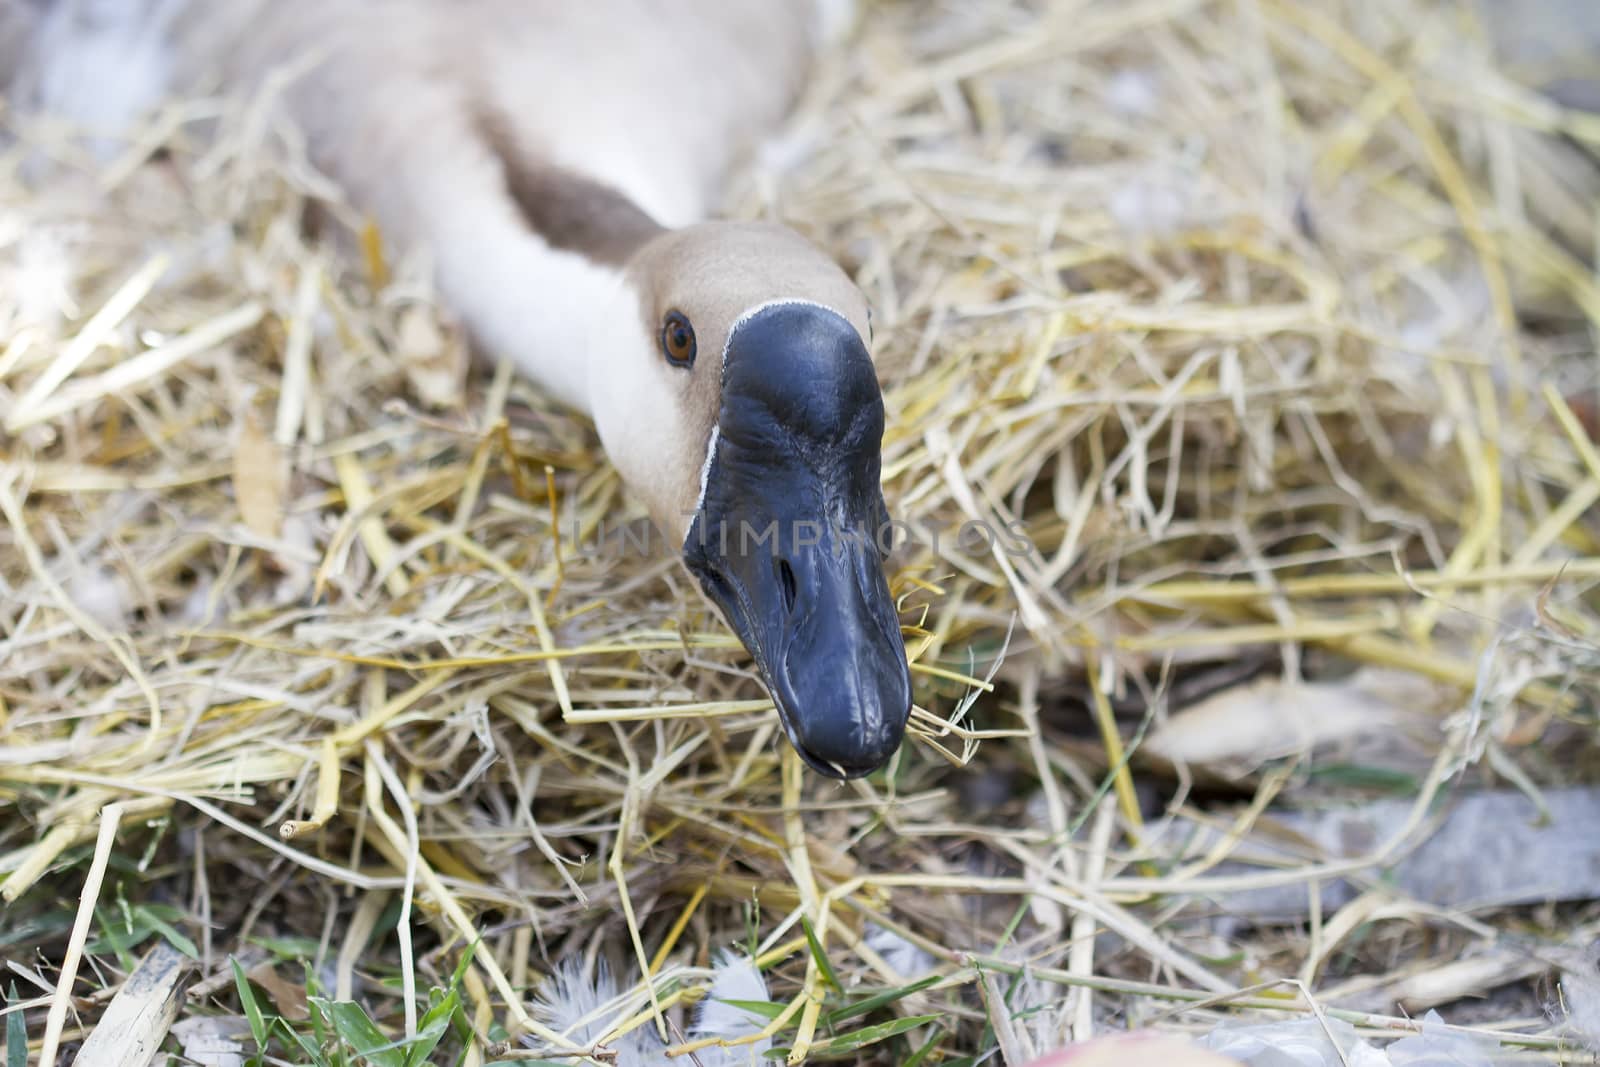 Goose hatch eggs in goose's nest